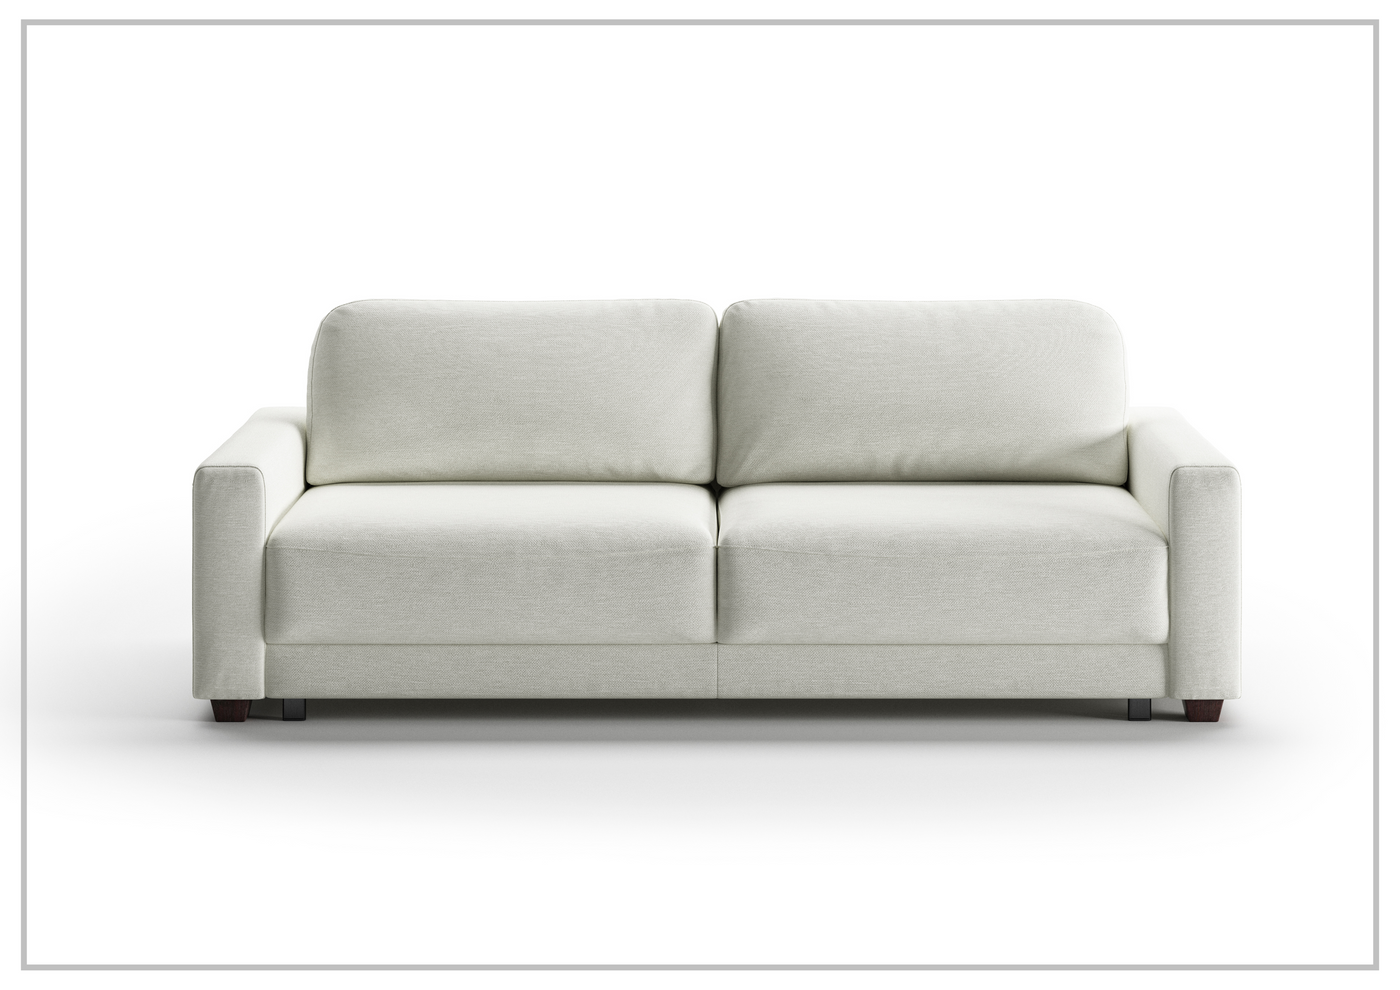 Luonto Belton Fabric King Sofa Sleeper with Level Function